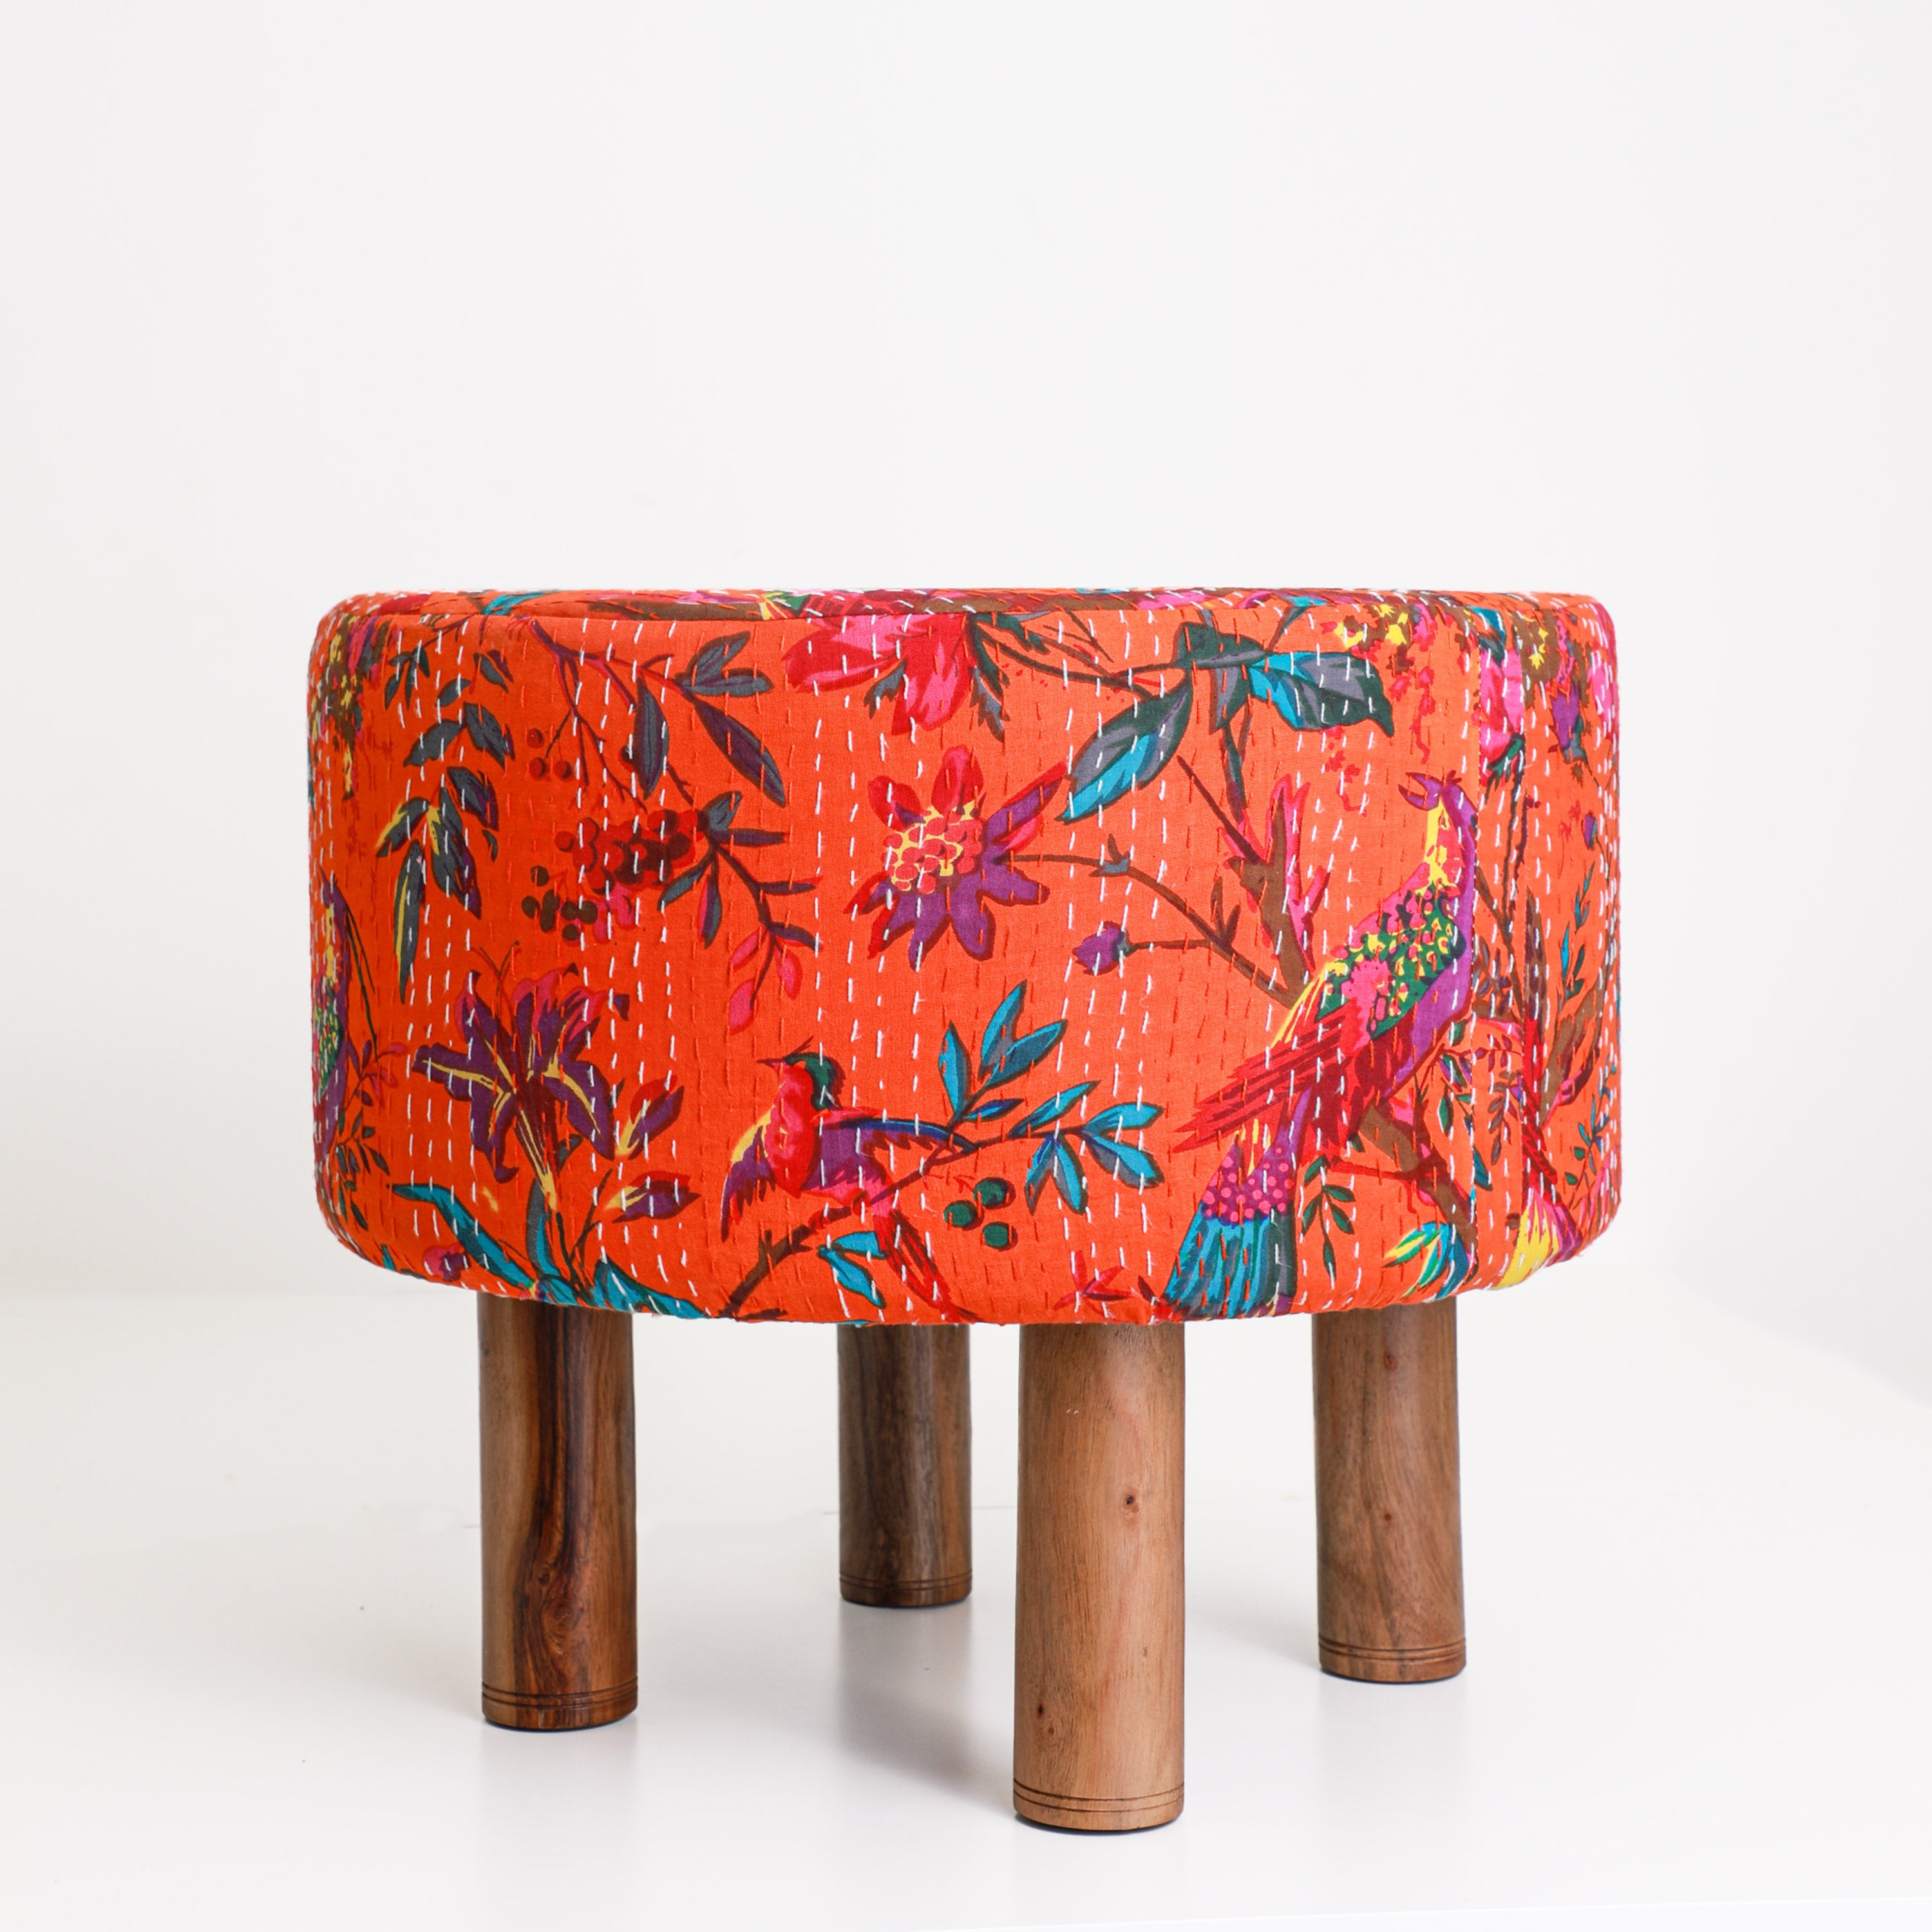 Orange kantha designer stool ottoman for sale in the USA